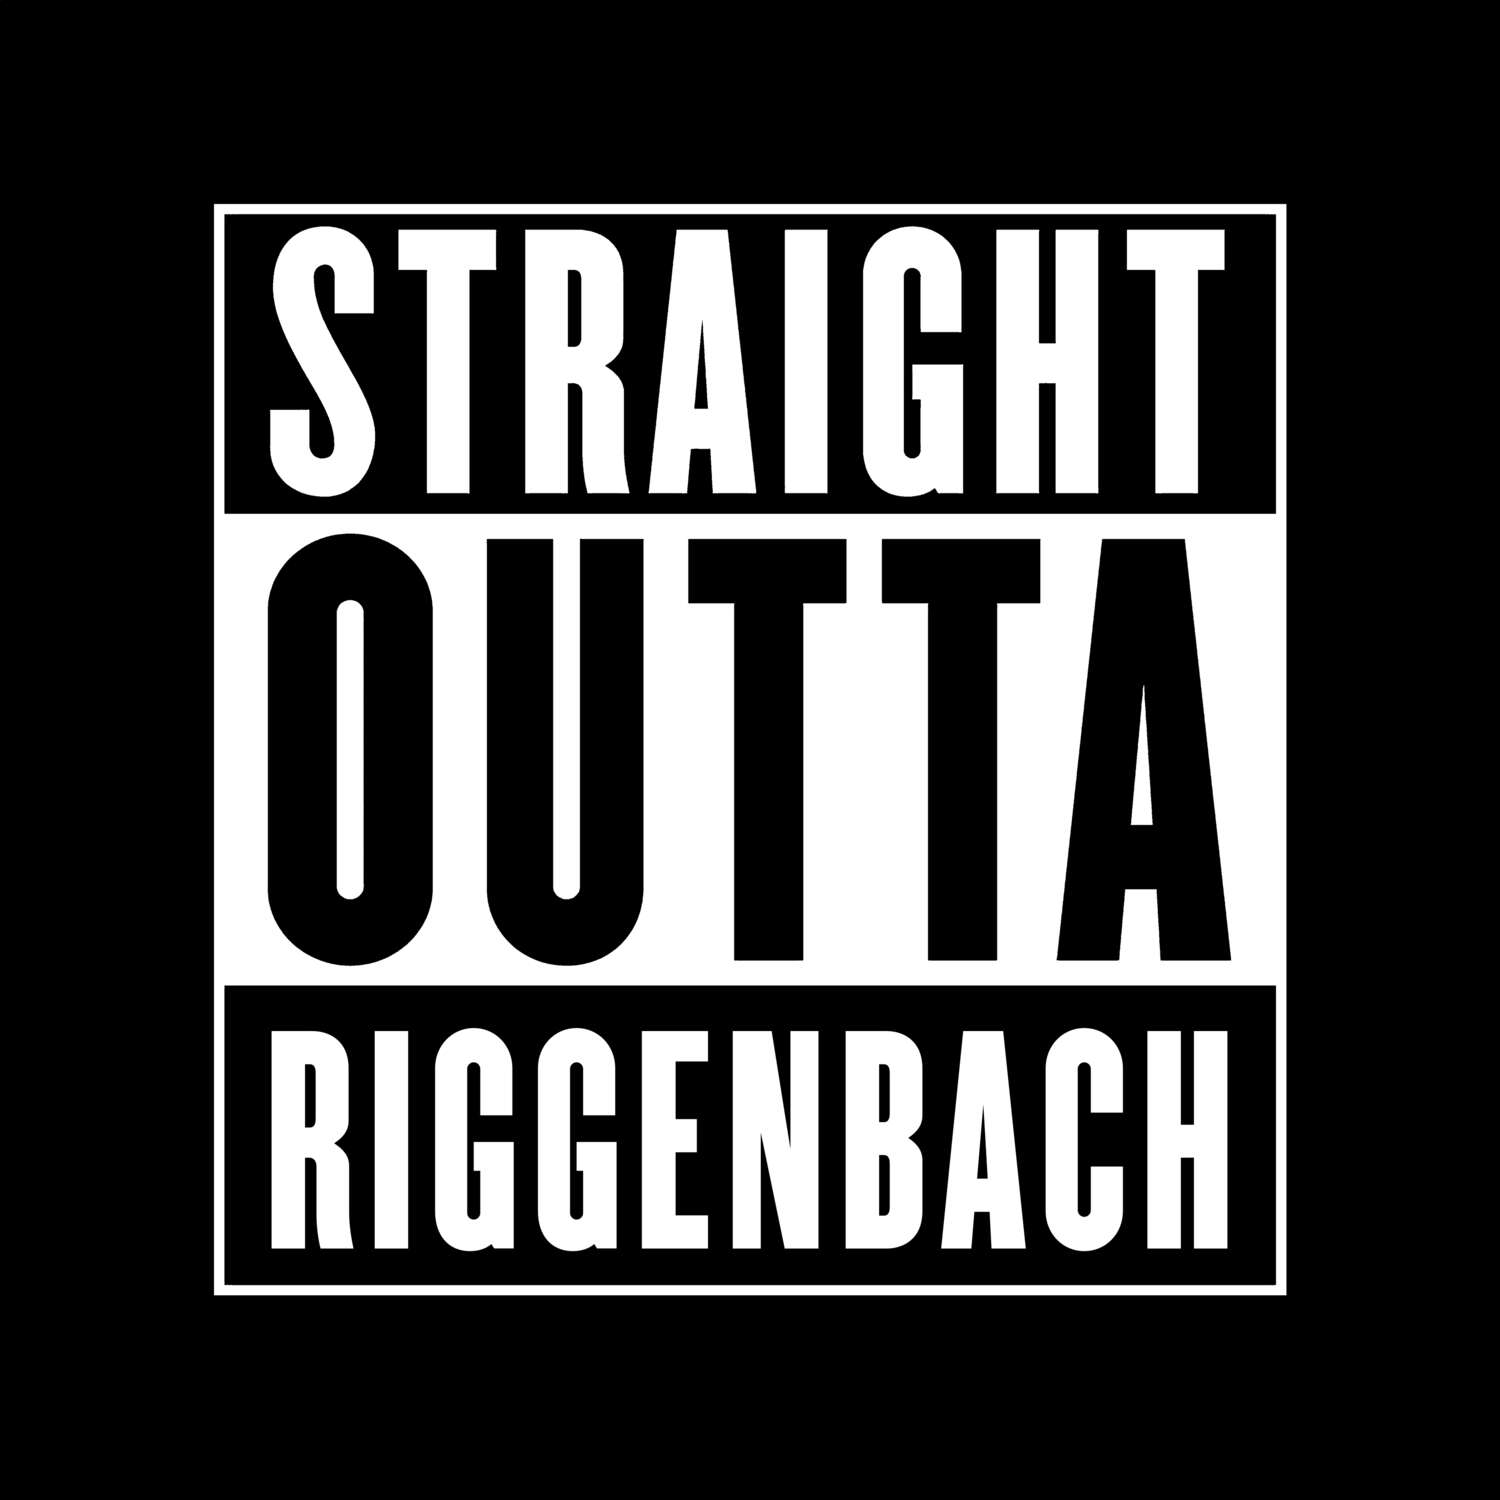 Riggenbach T-Shirt »Straight Outta«